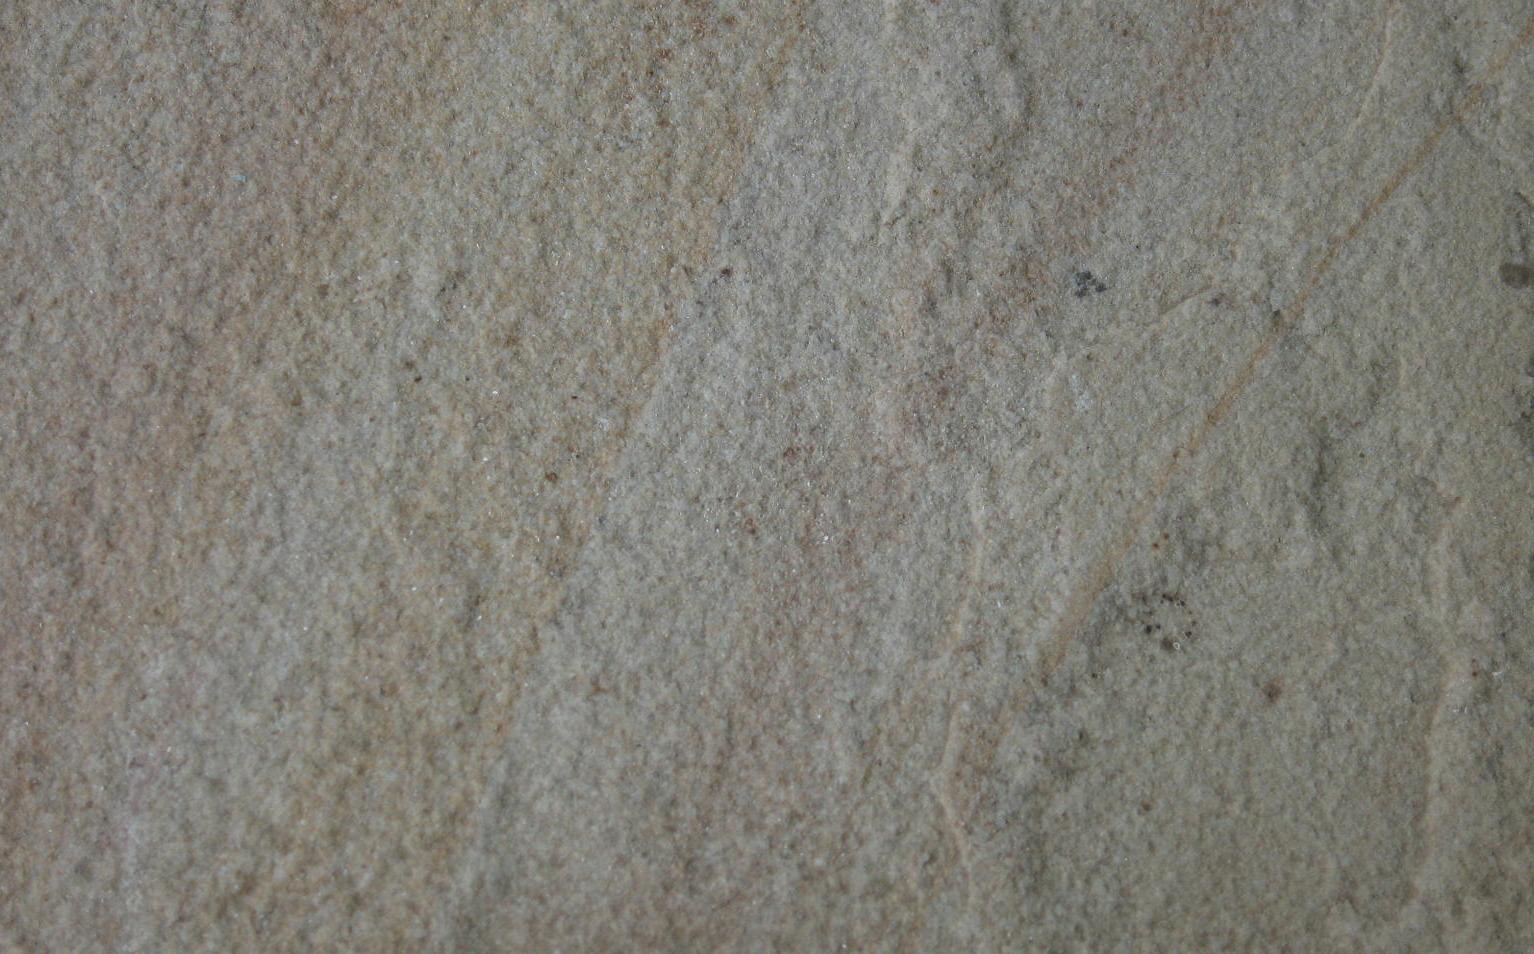 Gwalior Sandstone